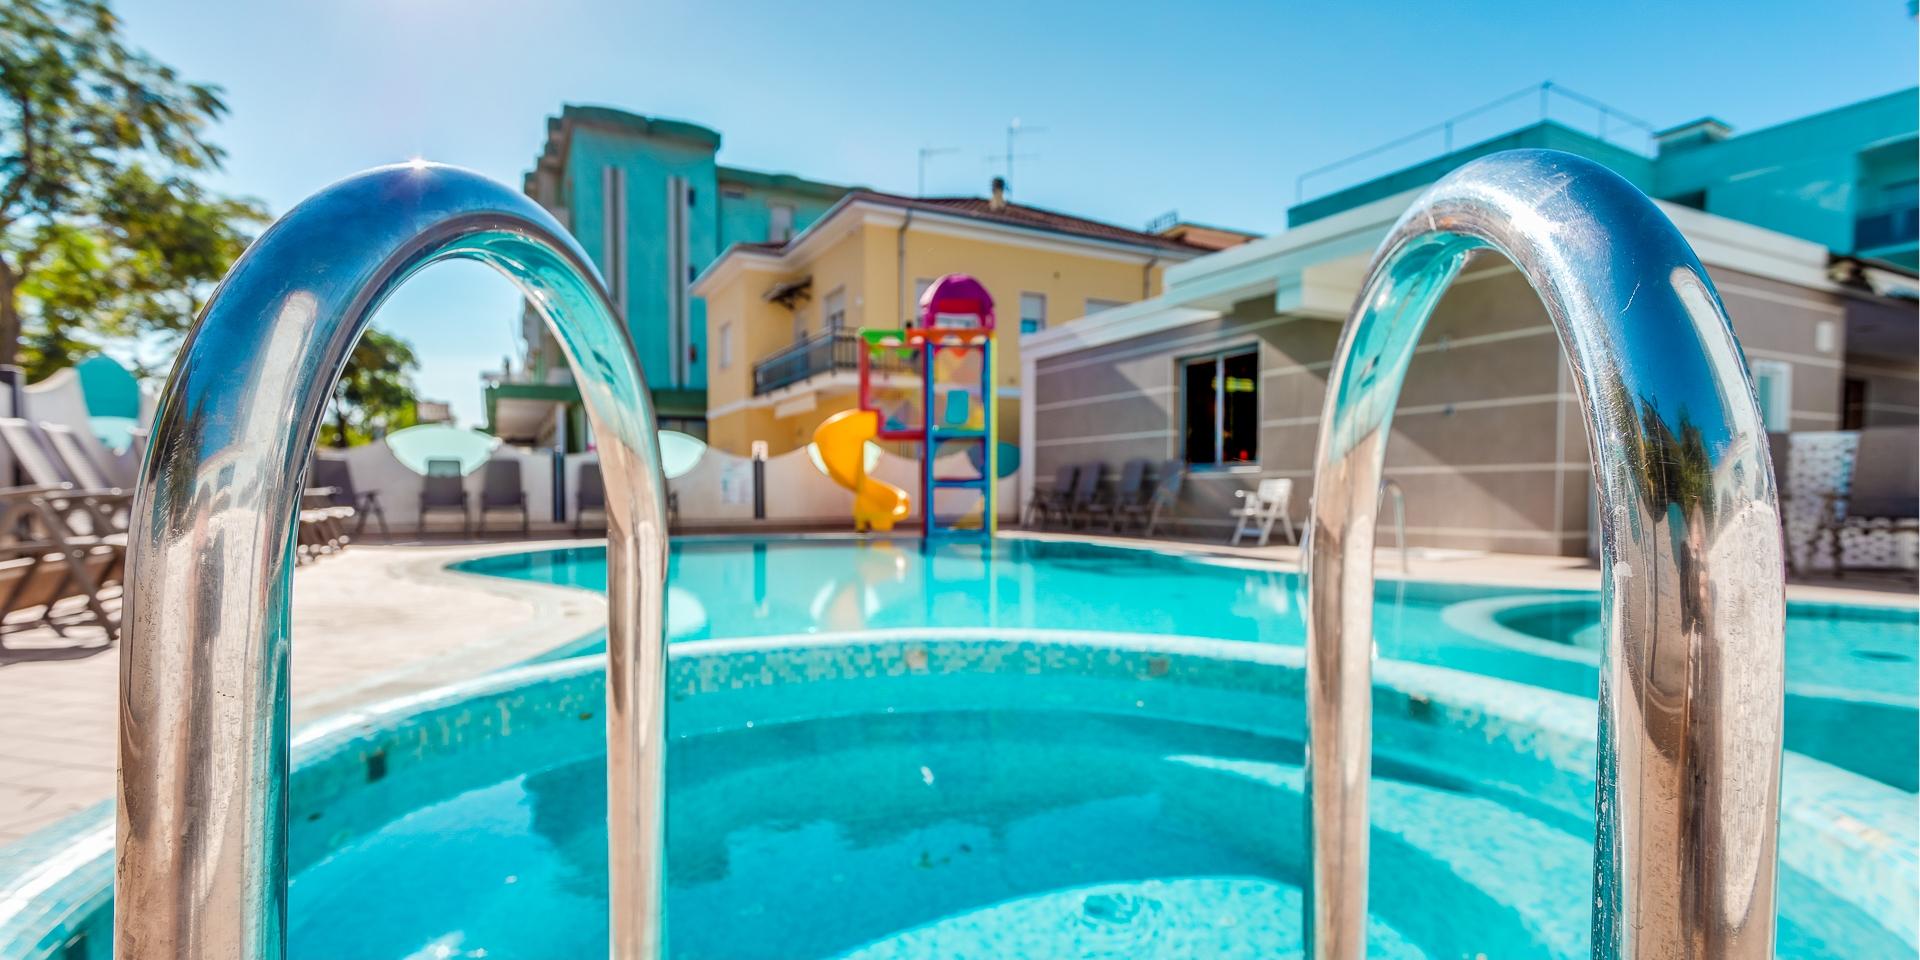 adriaticofamilyvillage de pool 007